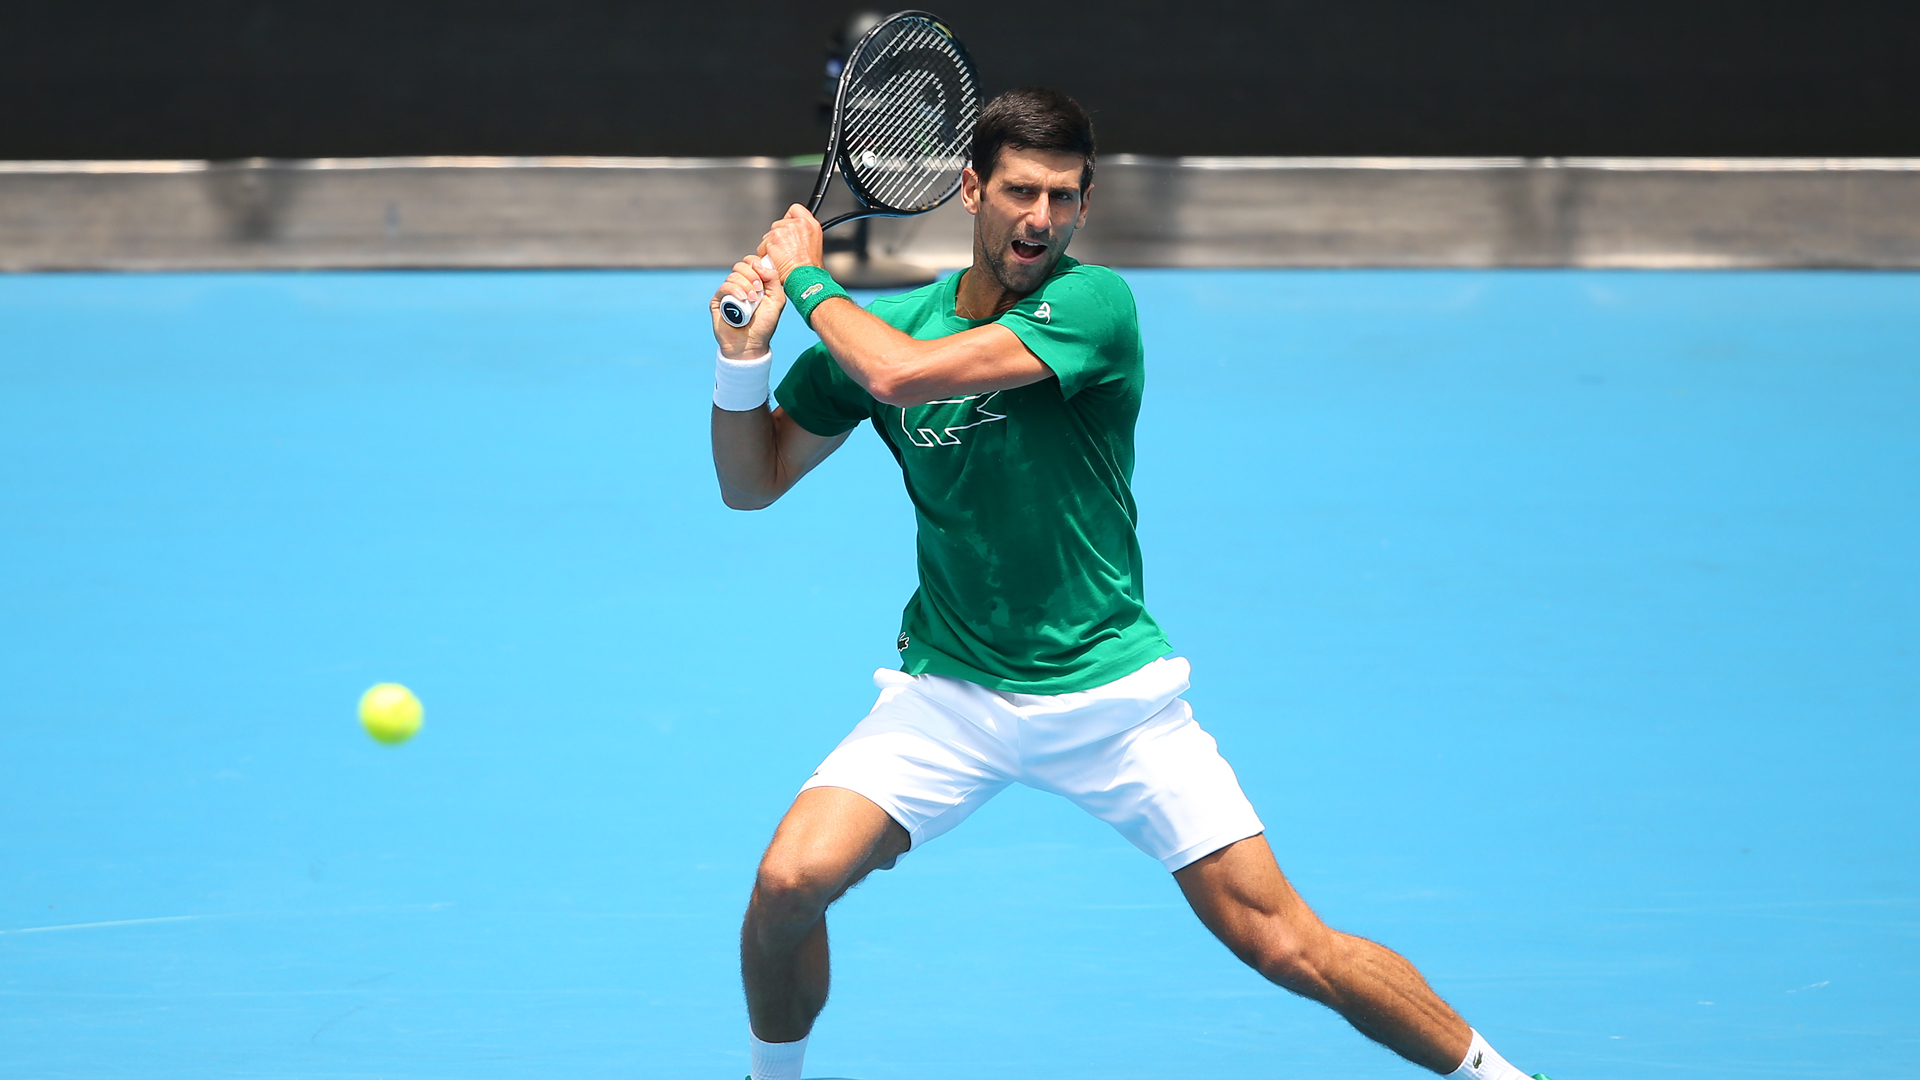 We take a look at Novak Djokovic's form ahead of his Australian Open clash with Jan-Lennard Struff.